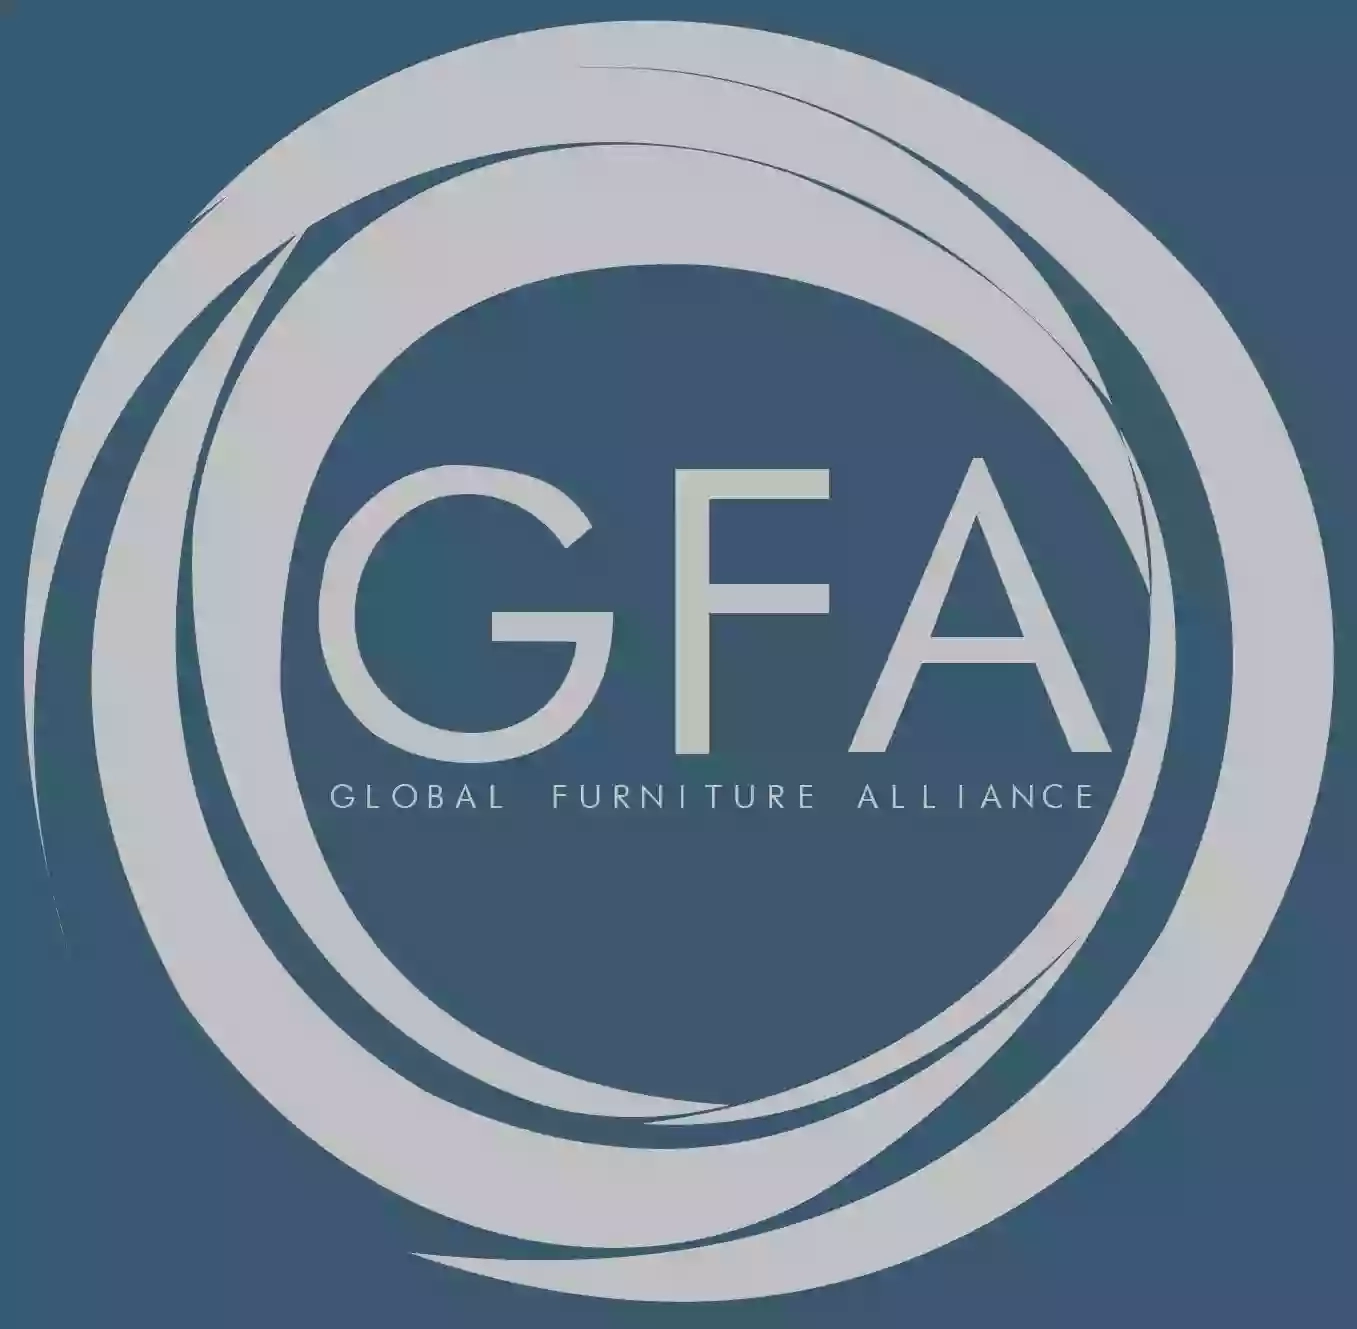 Global Furniture Alliance Ltd